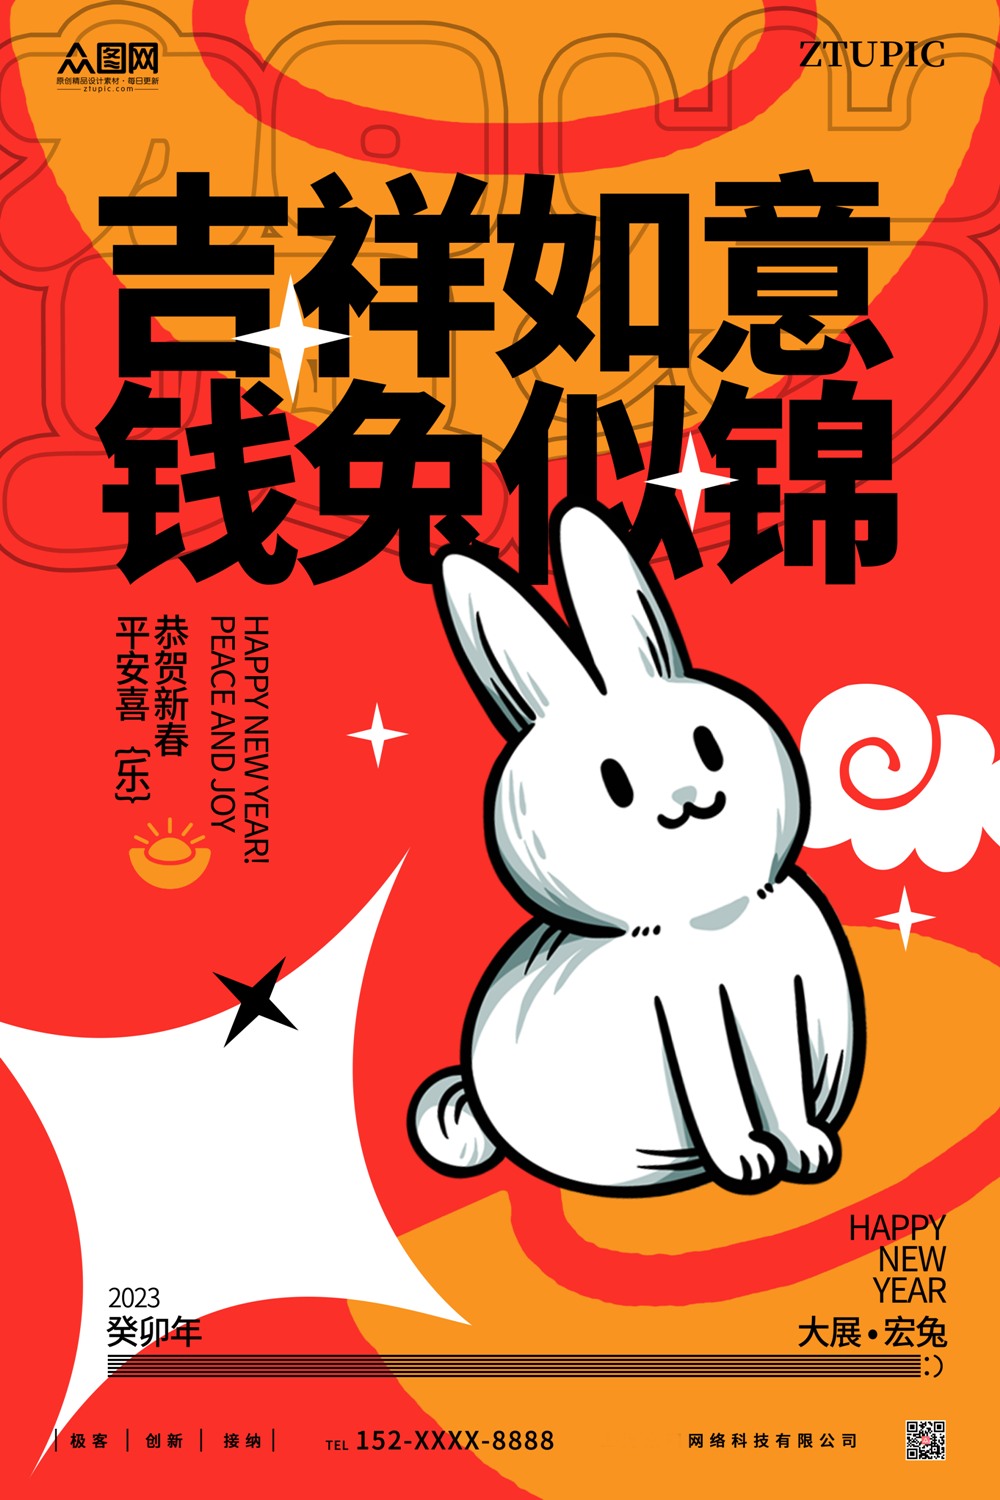 [PSD] 可爱潮流红色新年新春兔年海报